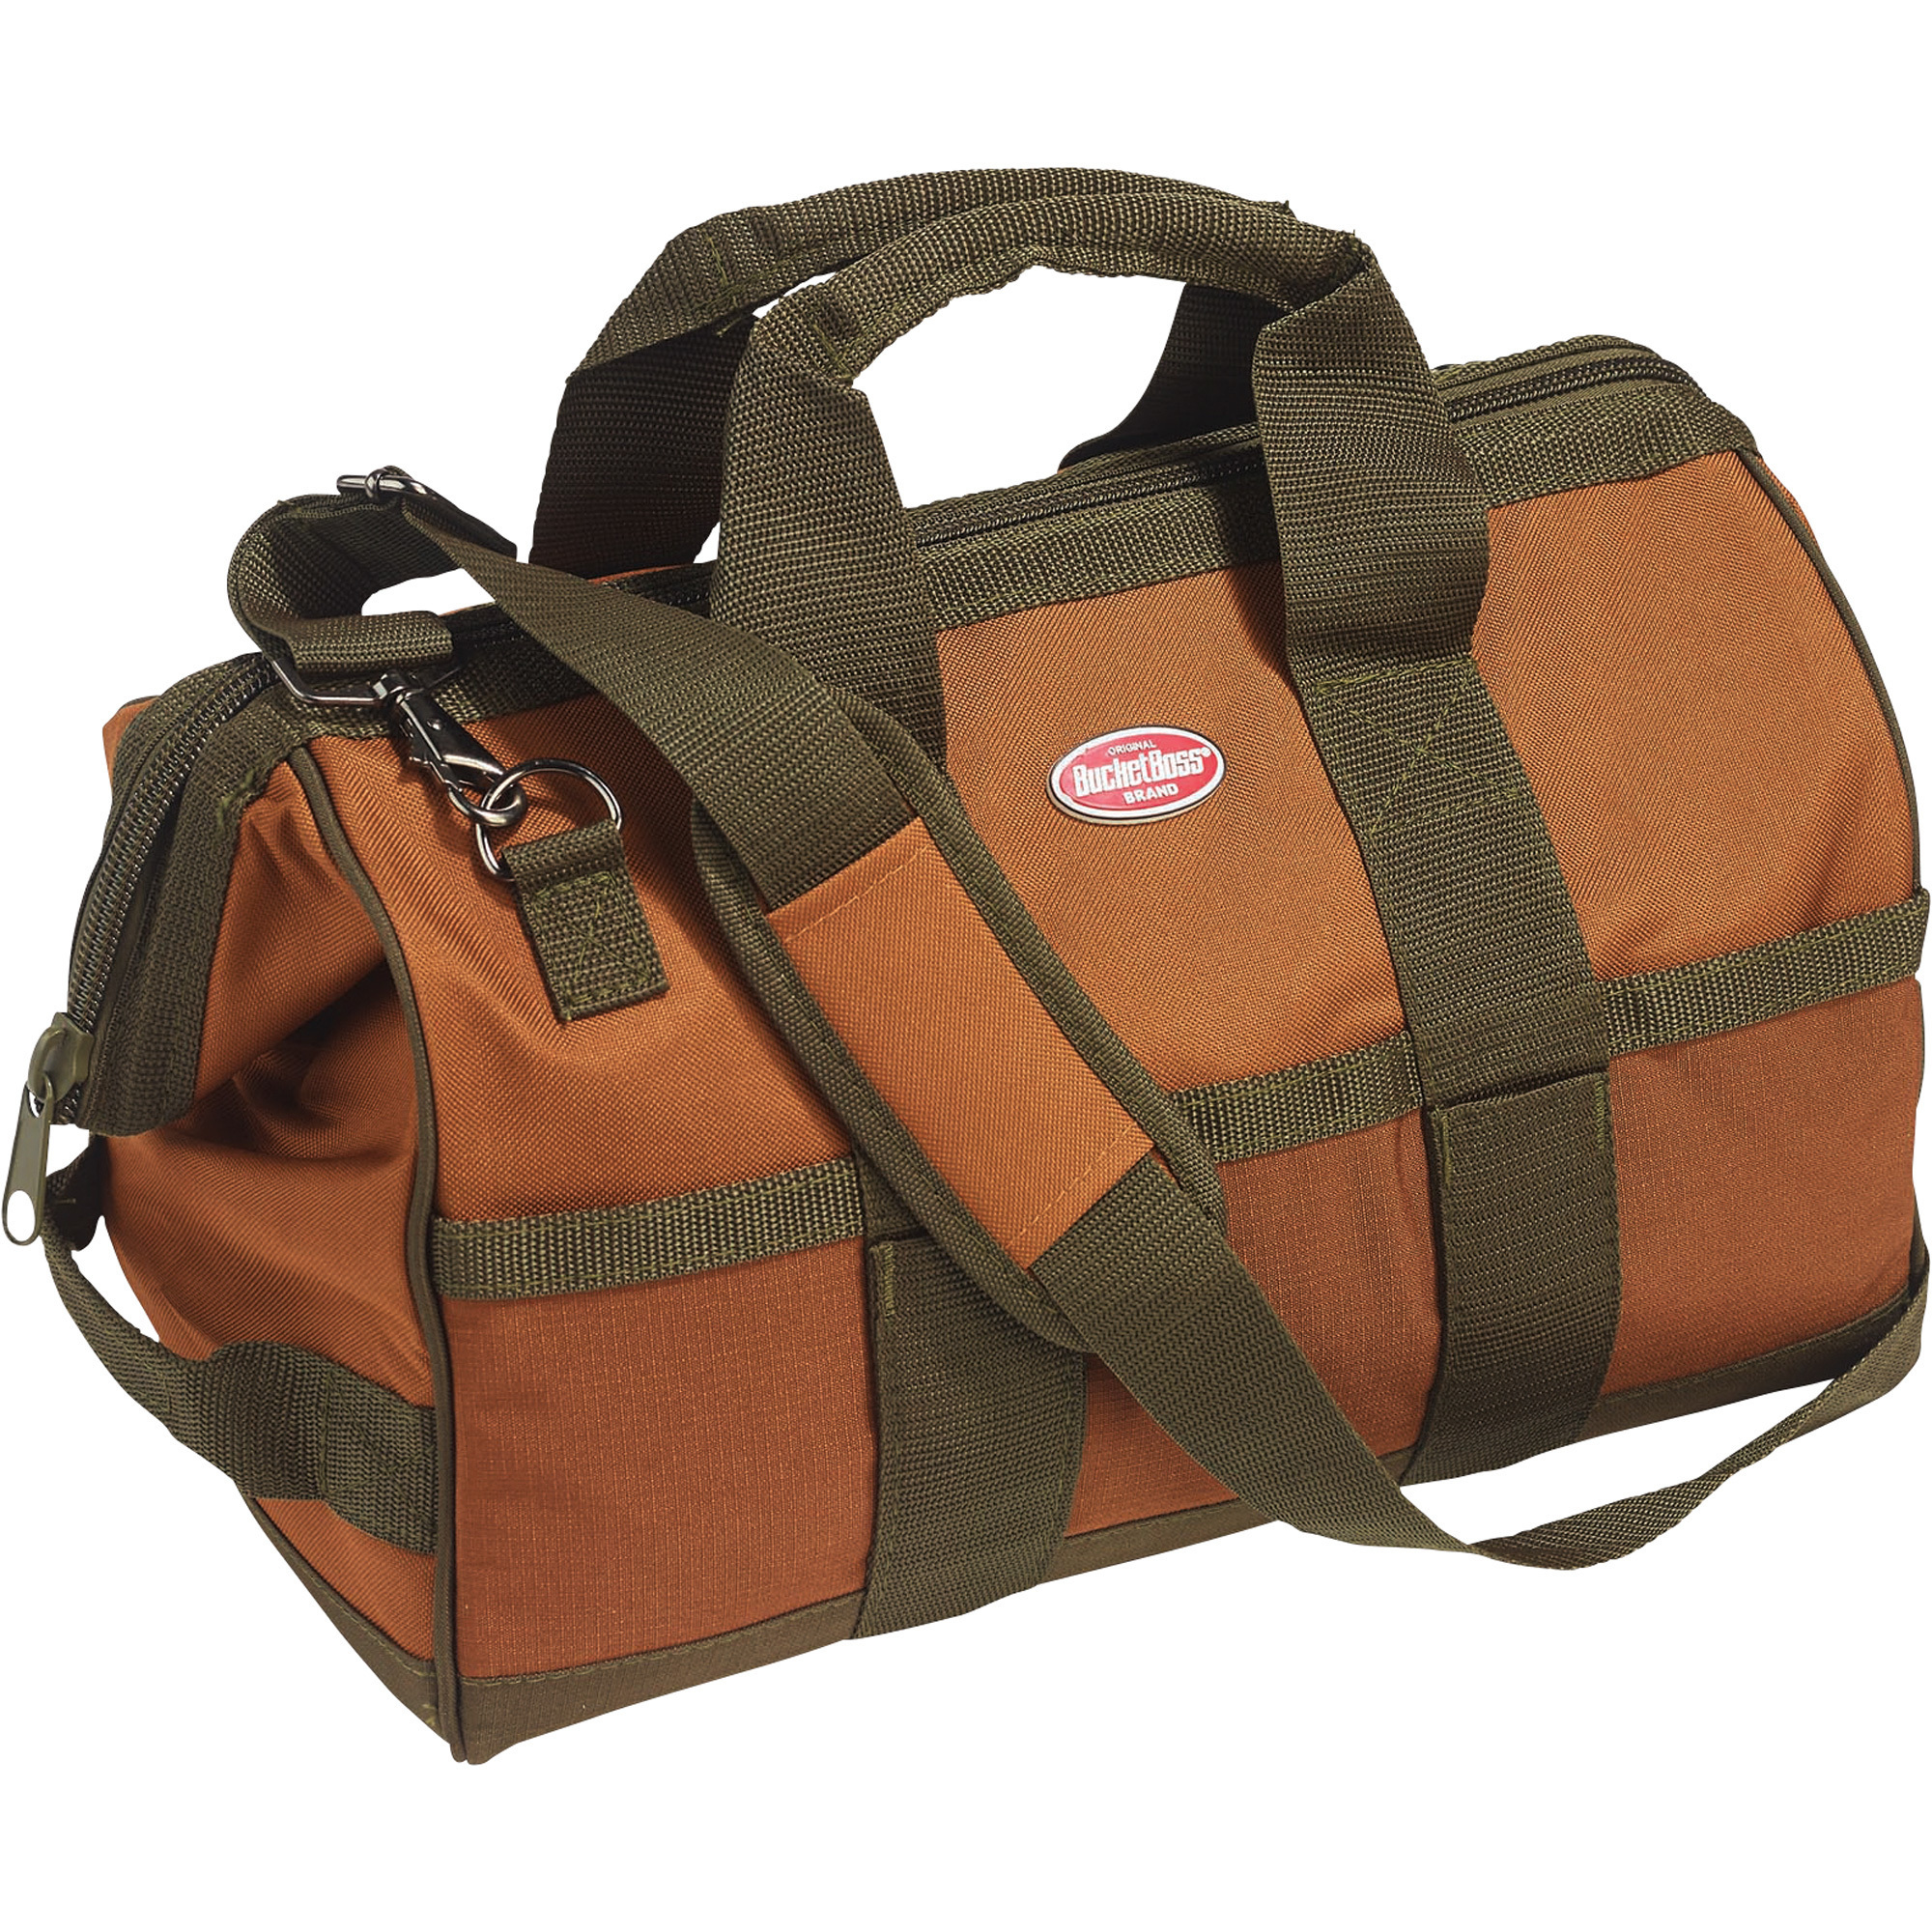 Bucket Boss Gatemouth 16 Tool Bag, Model# 60016